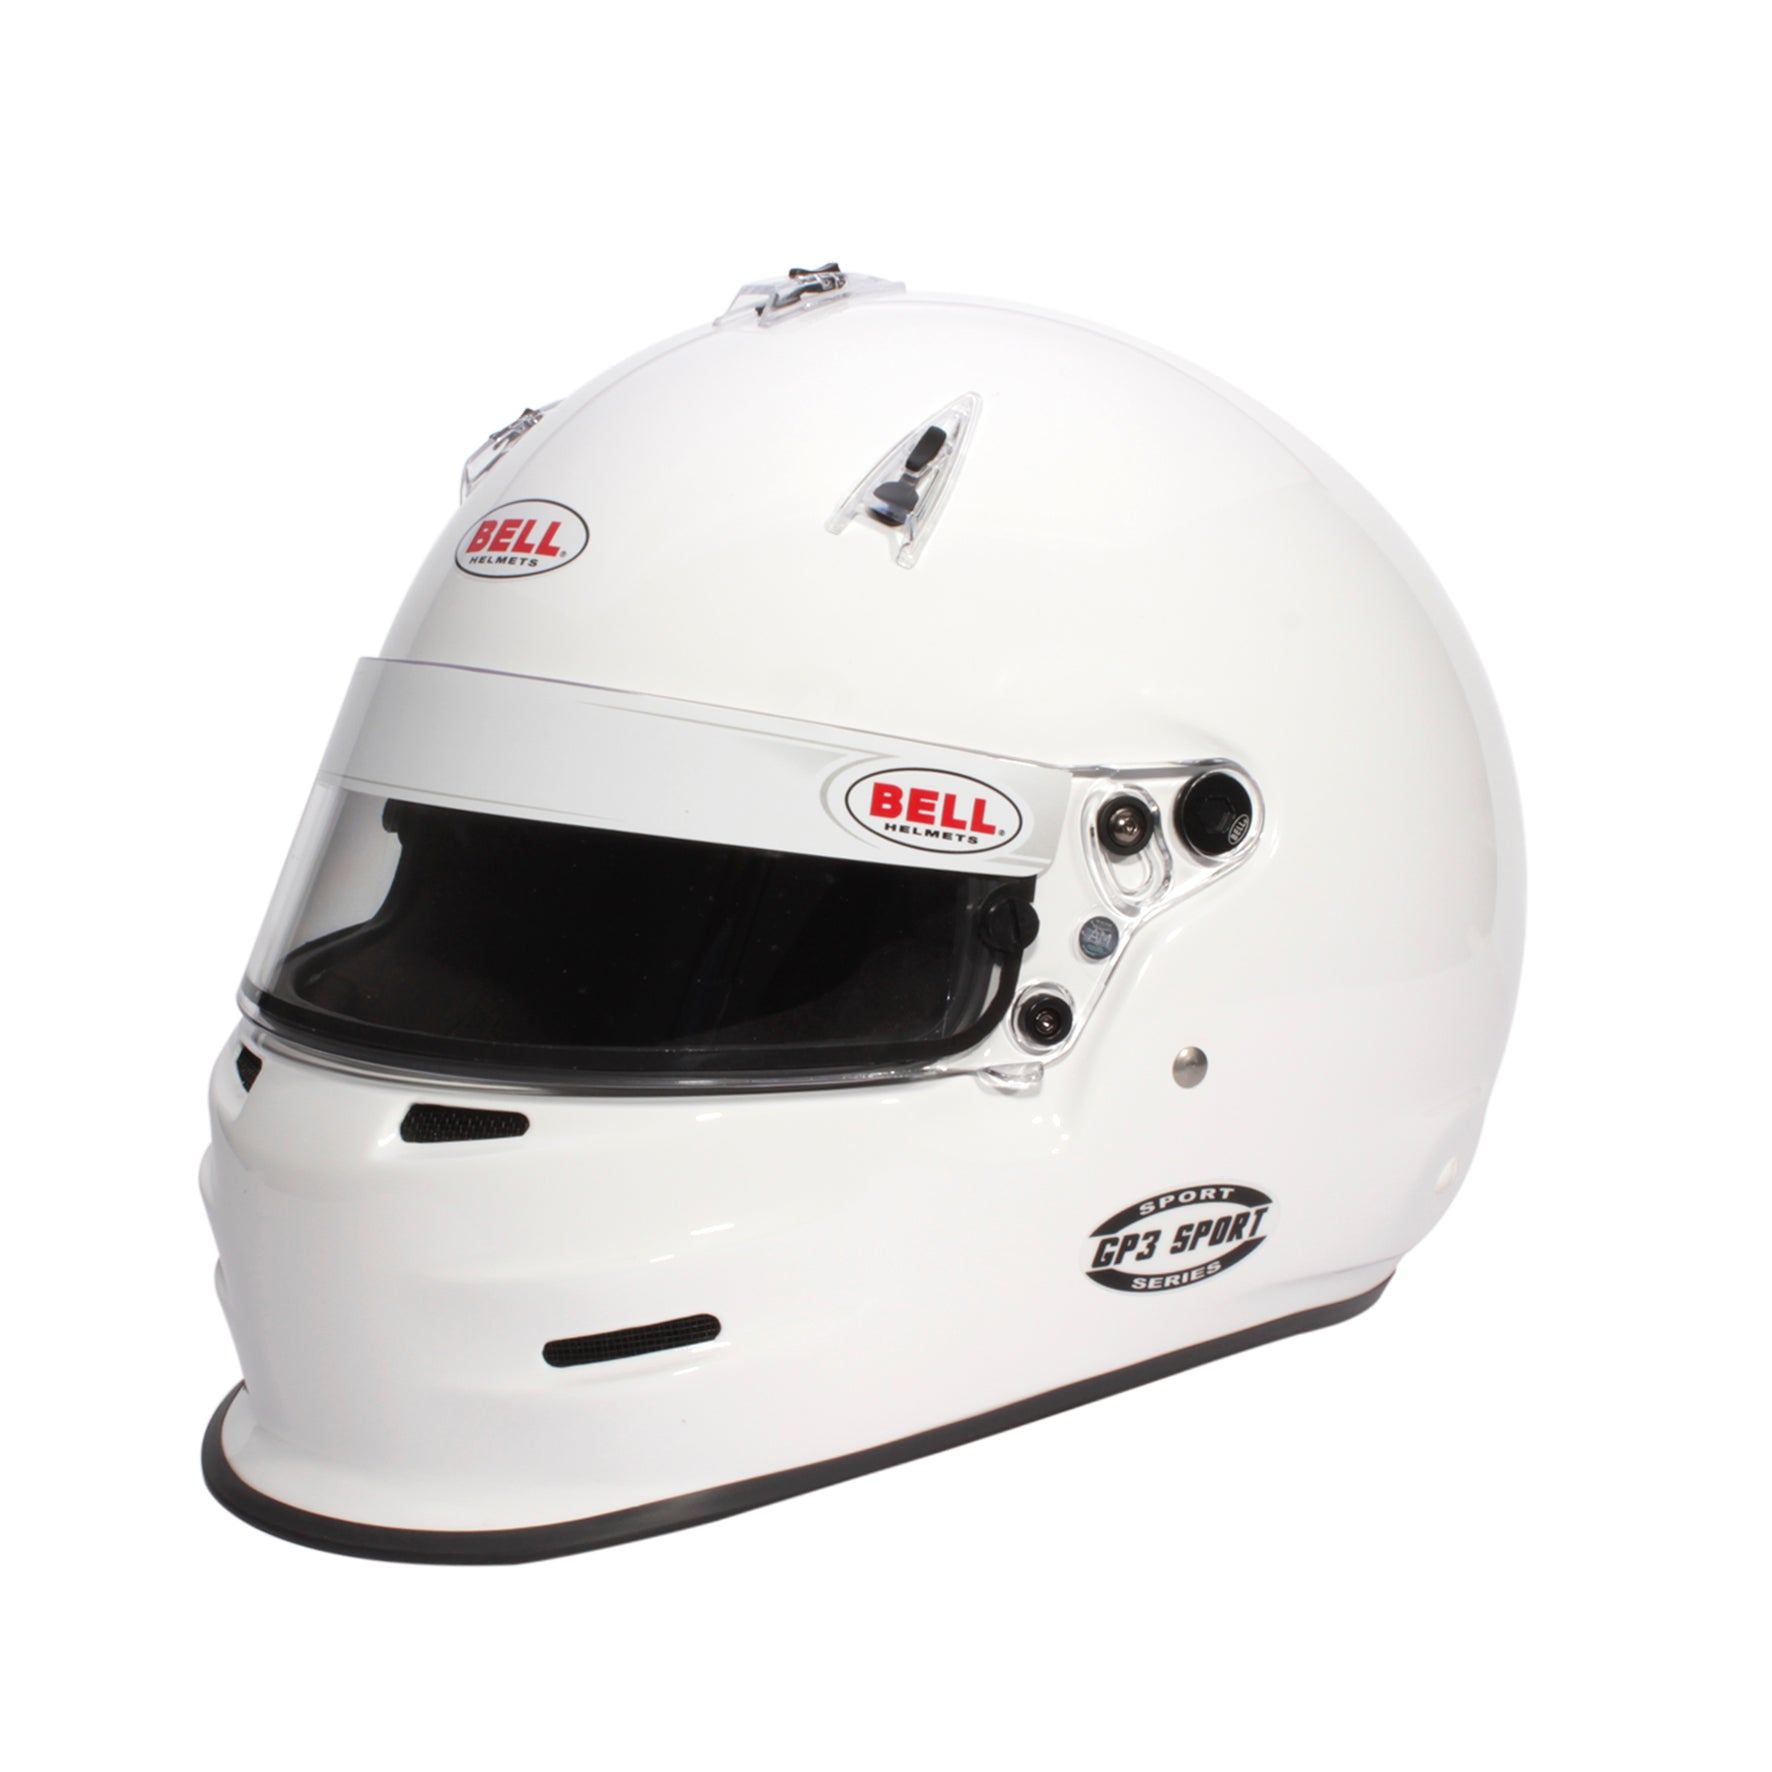 Bell GP3 SPORT SA2020 Helmet +FREE Fleece Helmet Bag